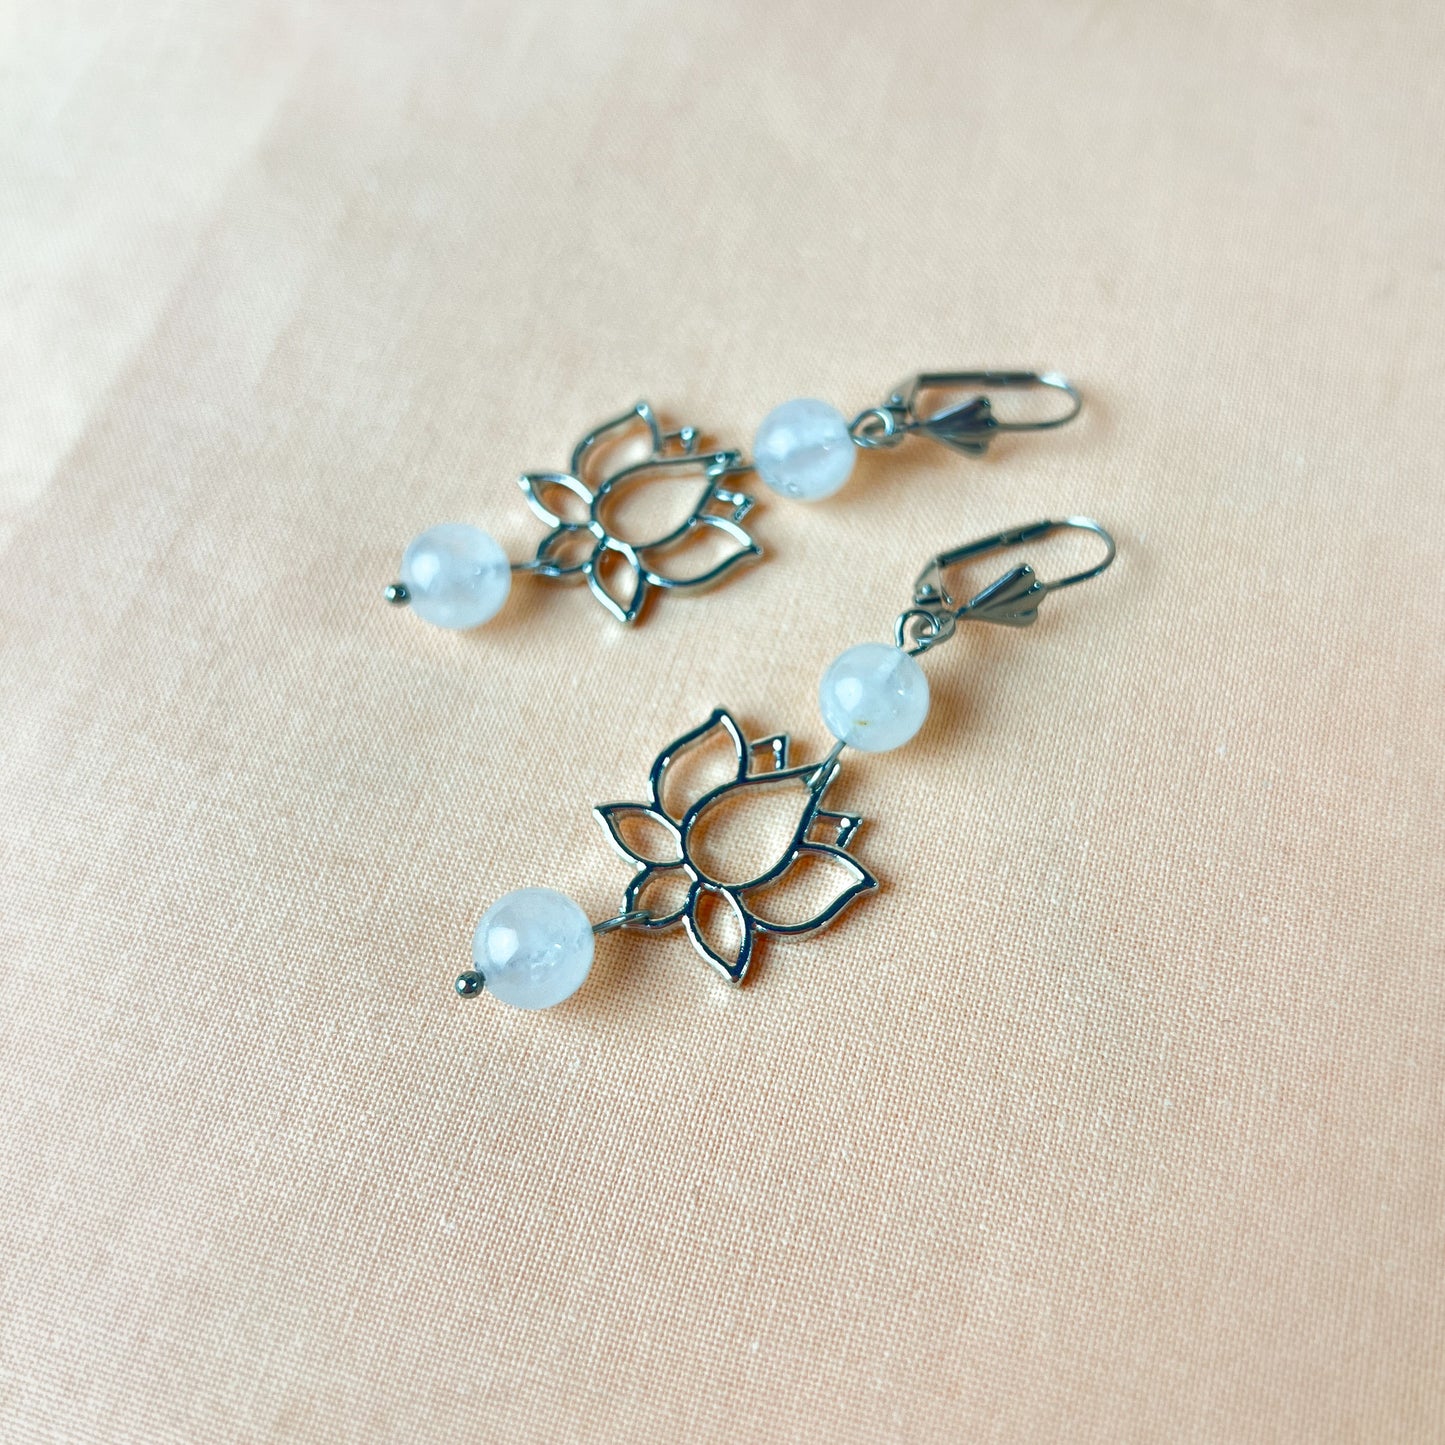 Clear quartz and lotus flower spiritual earrings